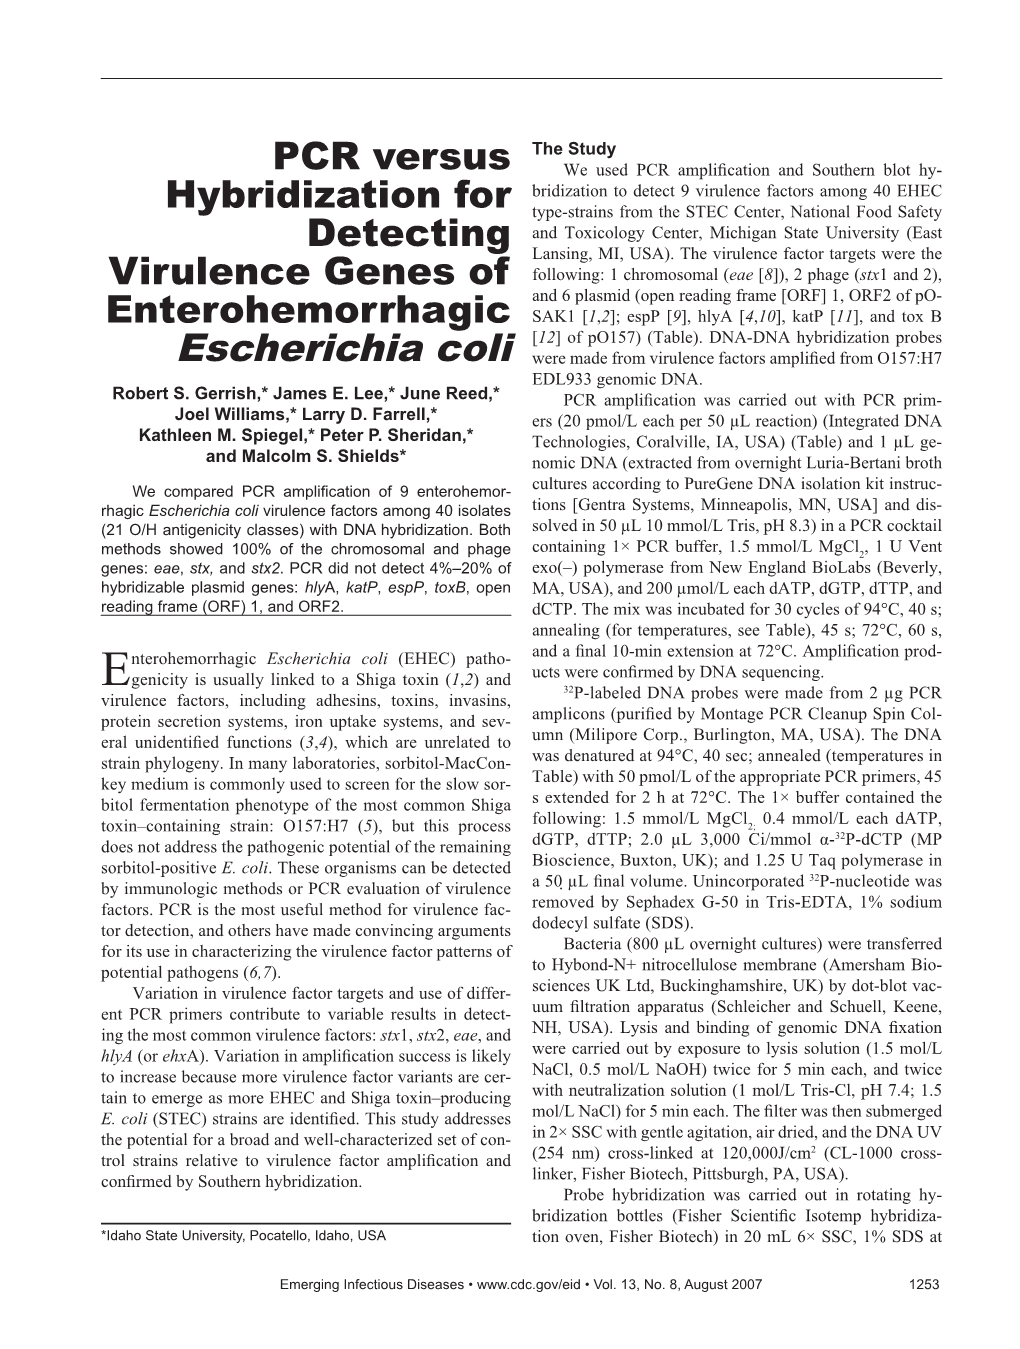 Escherichia Coli Were Made from Virulence Factors Ampliﬁ Ed from O157:H7 EDL933 Genomic DNA